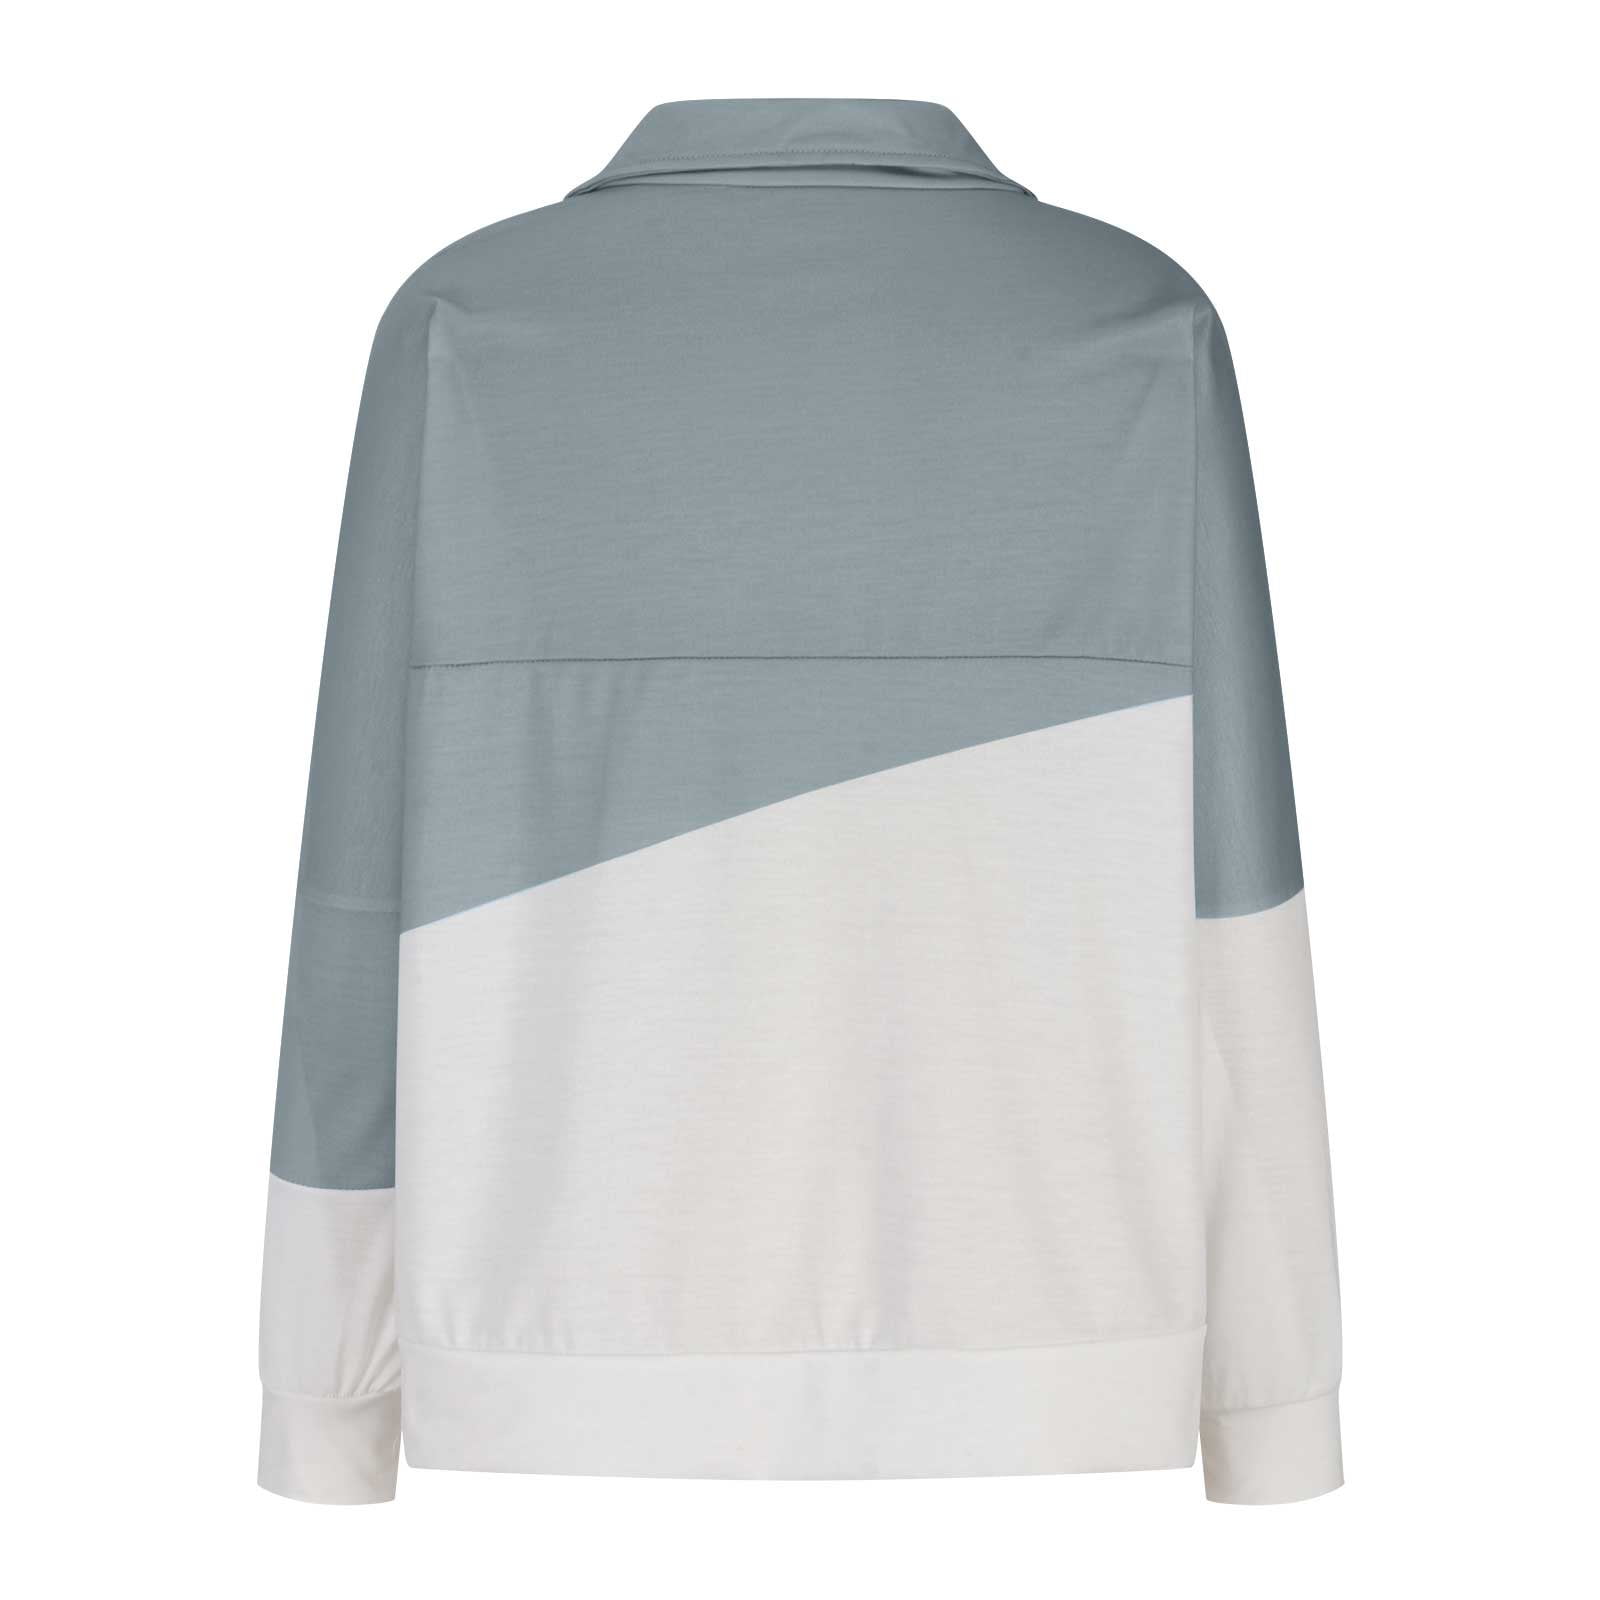 HAPIMO Discount Sweatshirt for Women Long Sleeve Casual Lapel Collar Color  Patchwork Sweatshirt Half Zip Pullover Tops Teen Girls Fashion Clothes Blue  S 